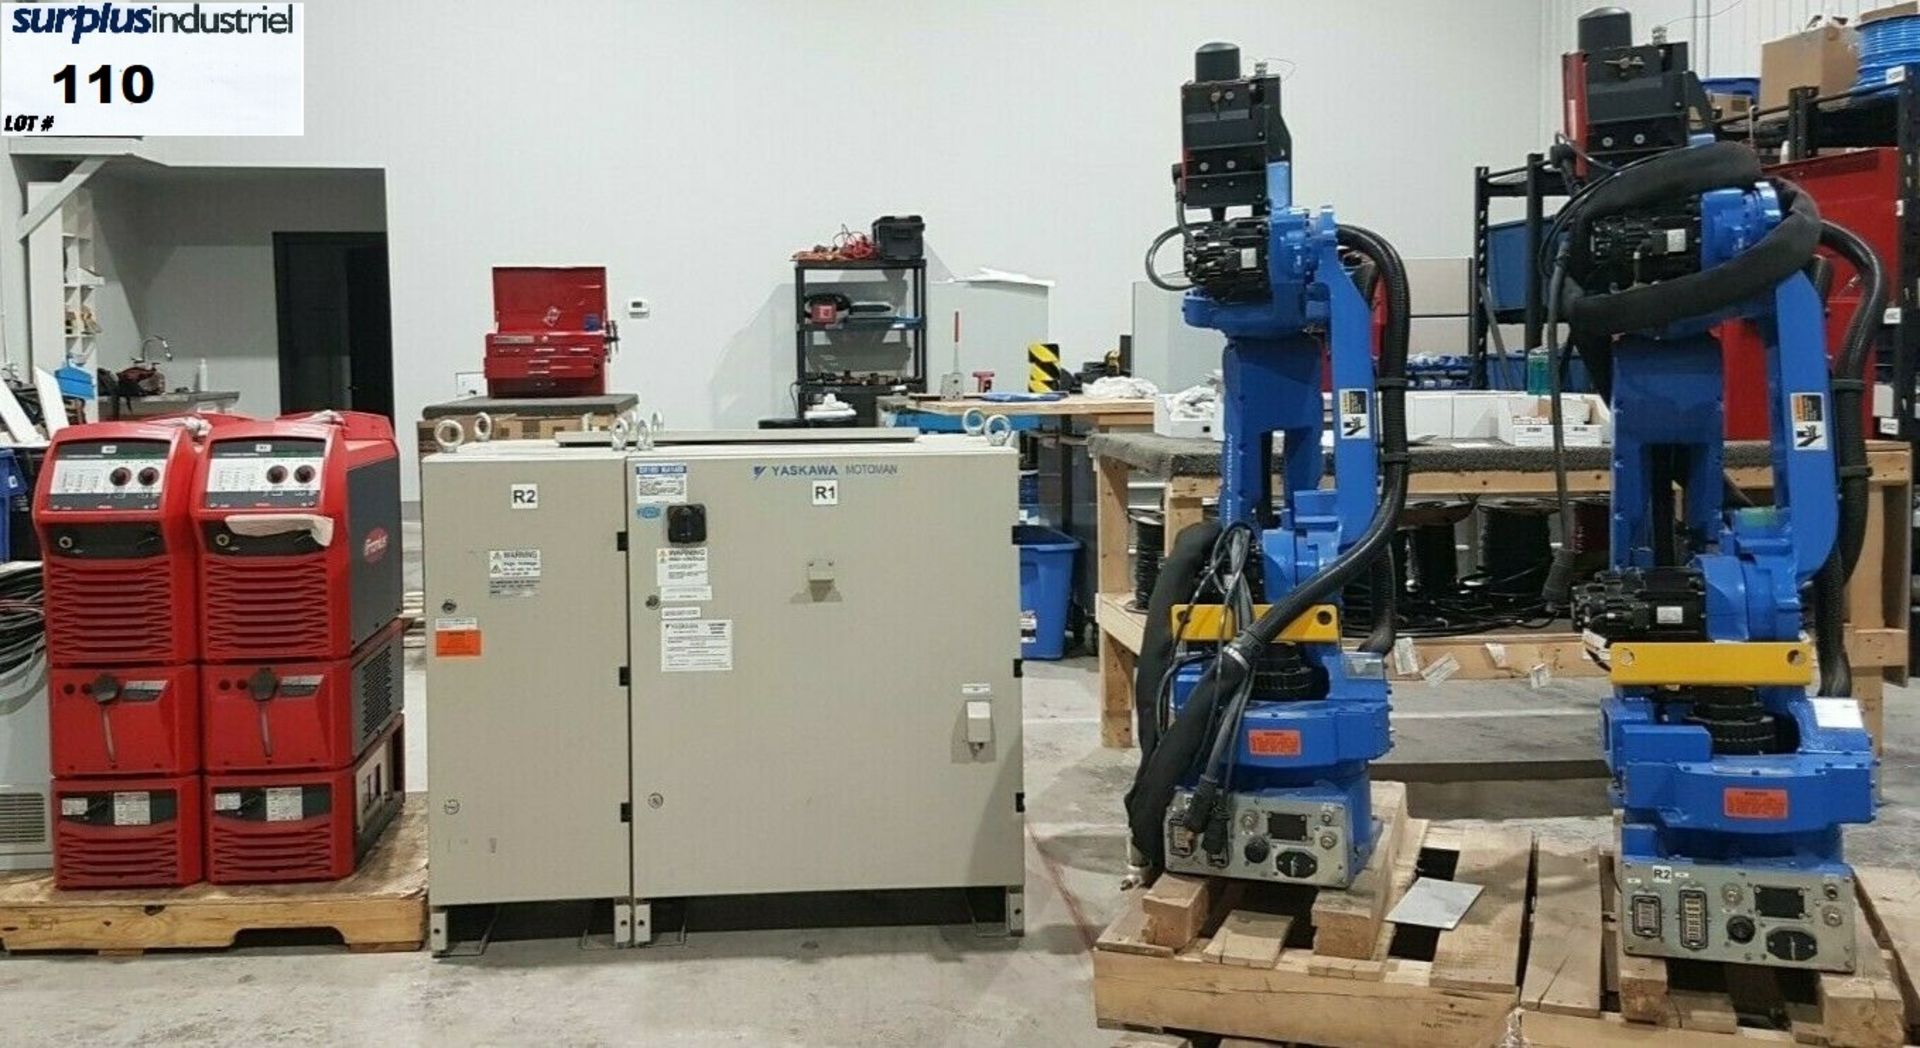 2 welders Fronius model A-4600 + 2 Robot Motoman VA-1400 + control dx 100